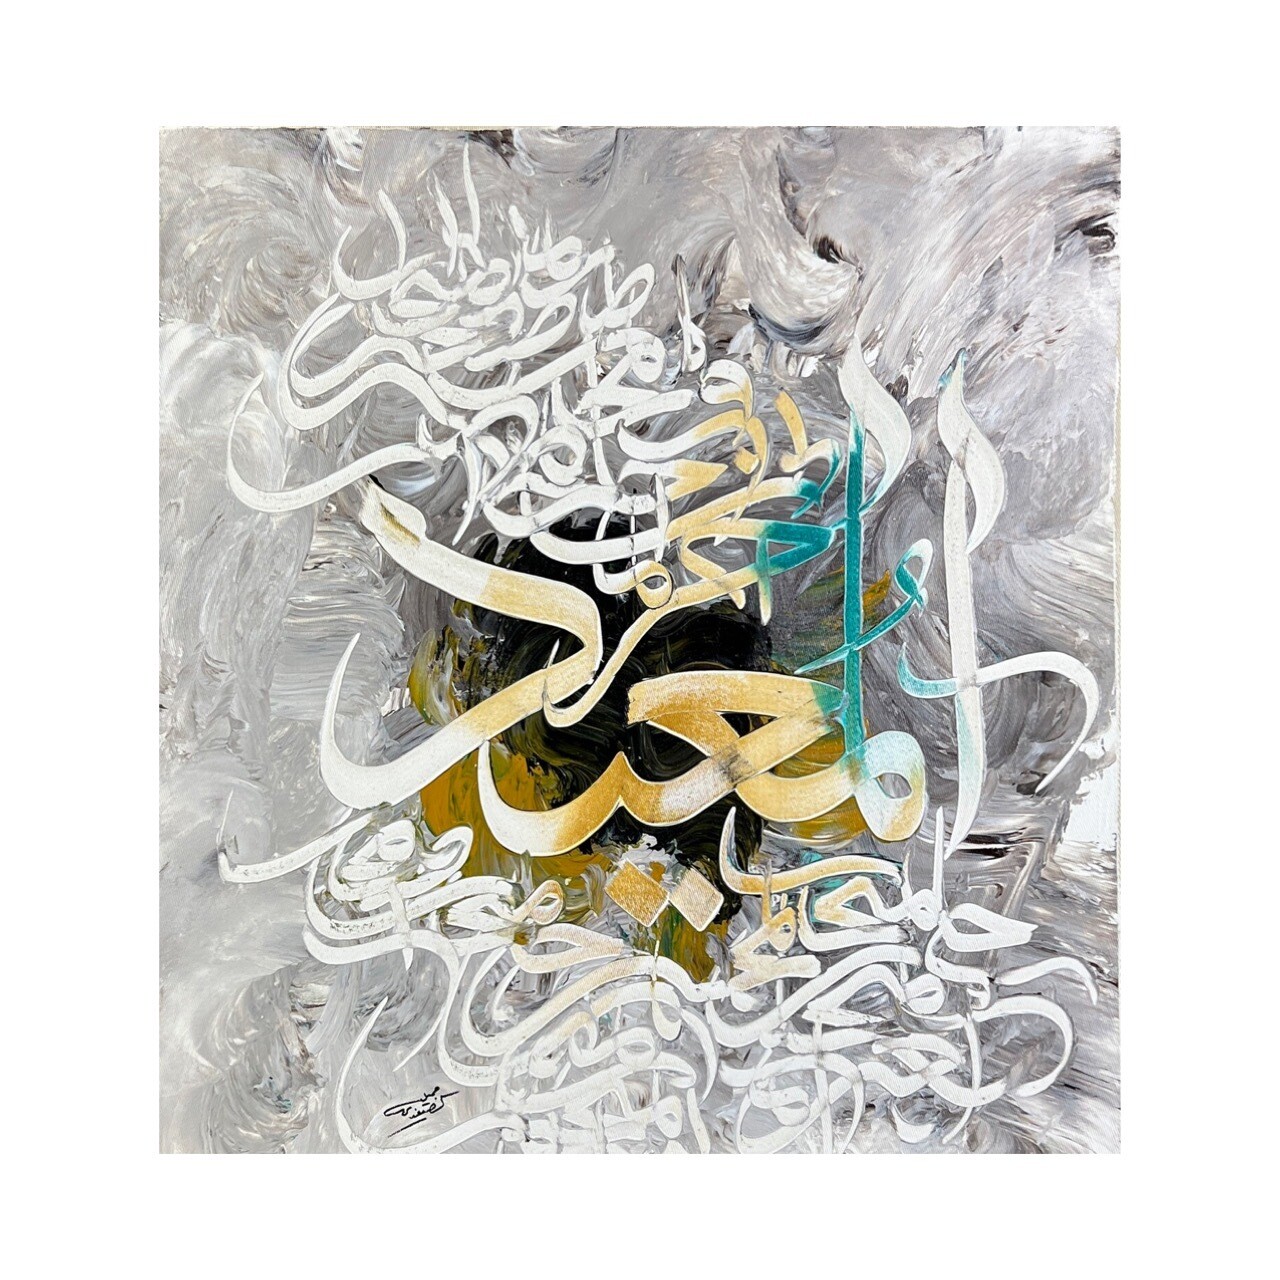 Al Mueed Textured Multi-Media Original Textured Canvas